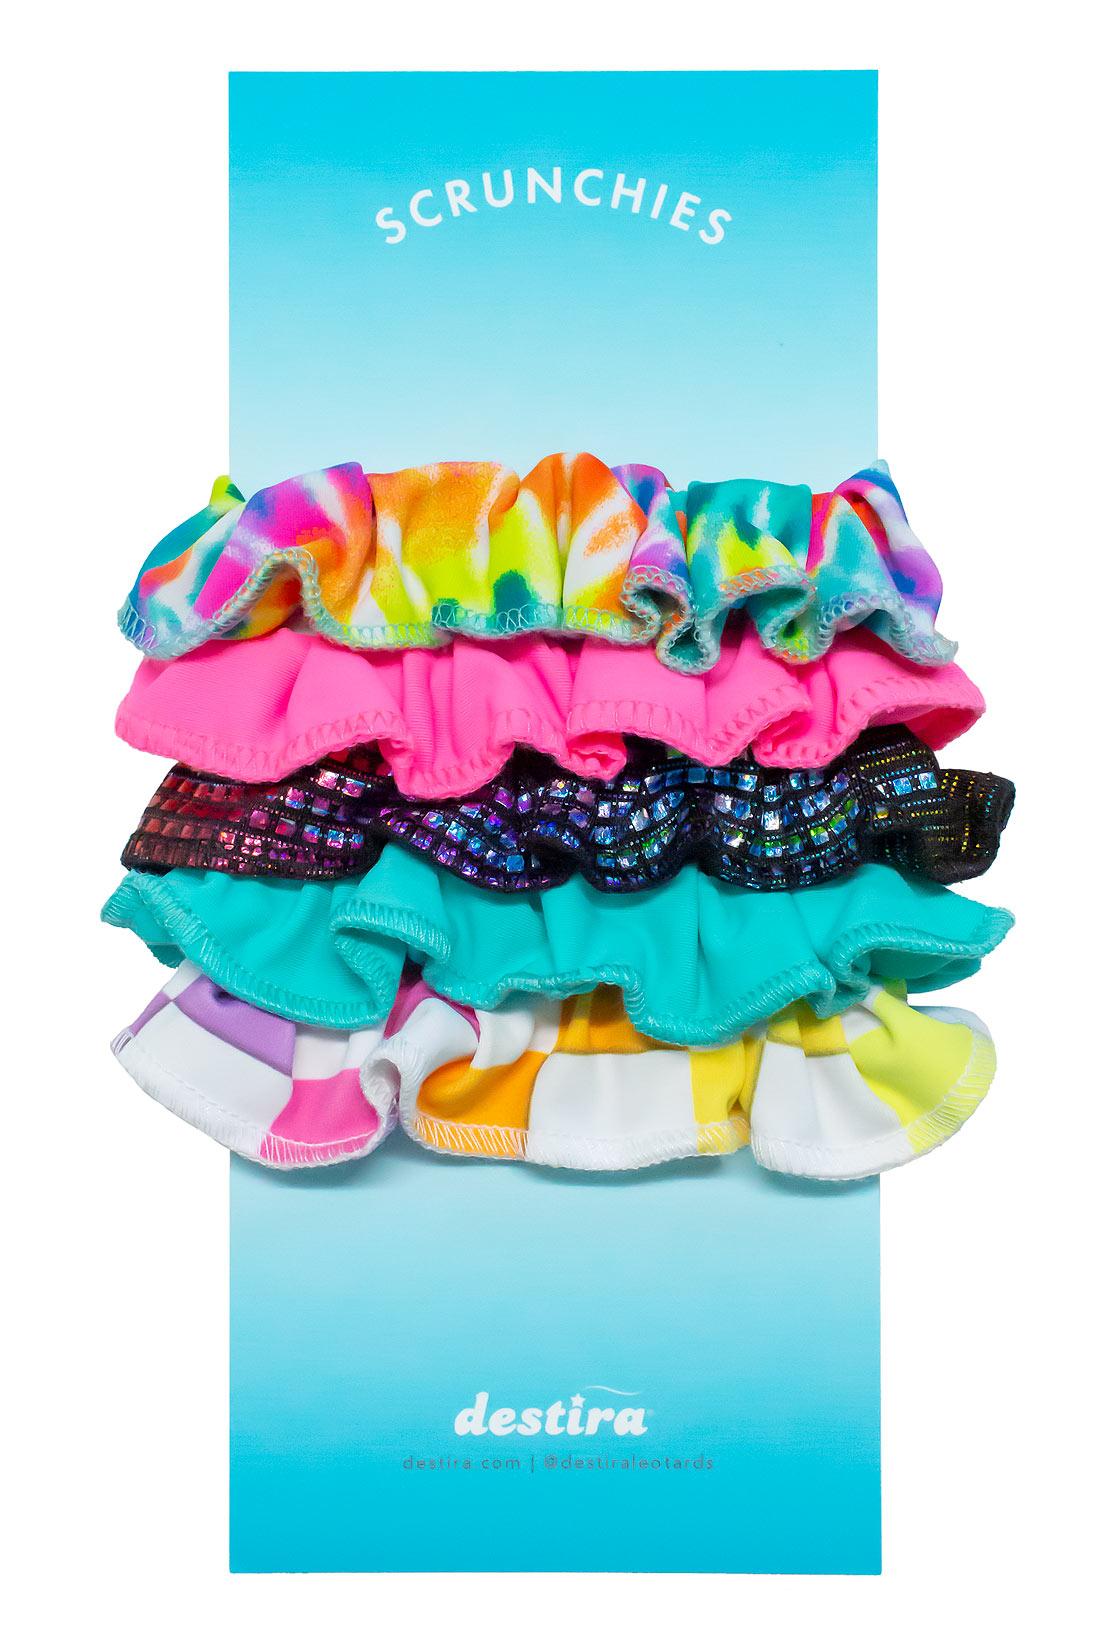 Rainbow scrunchies for gymnasts, Destira, 2023